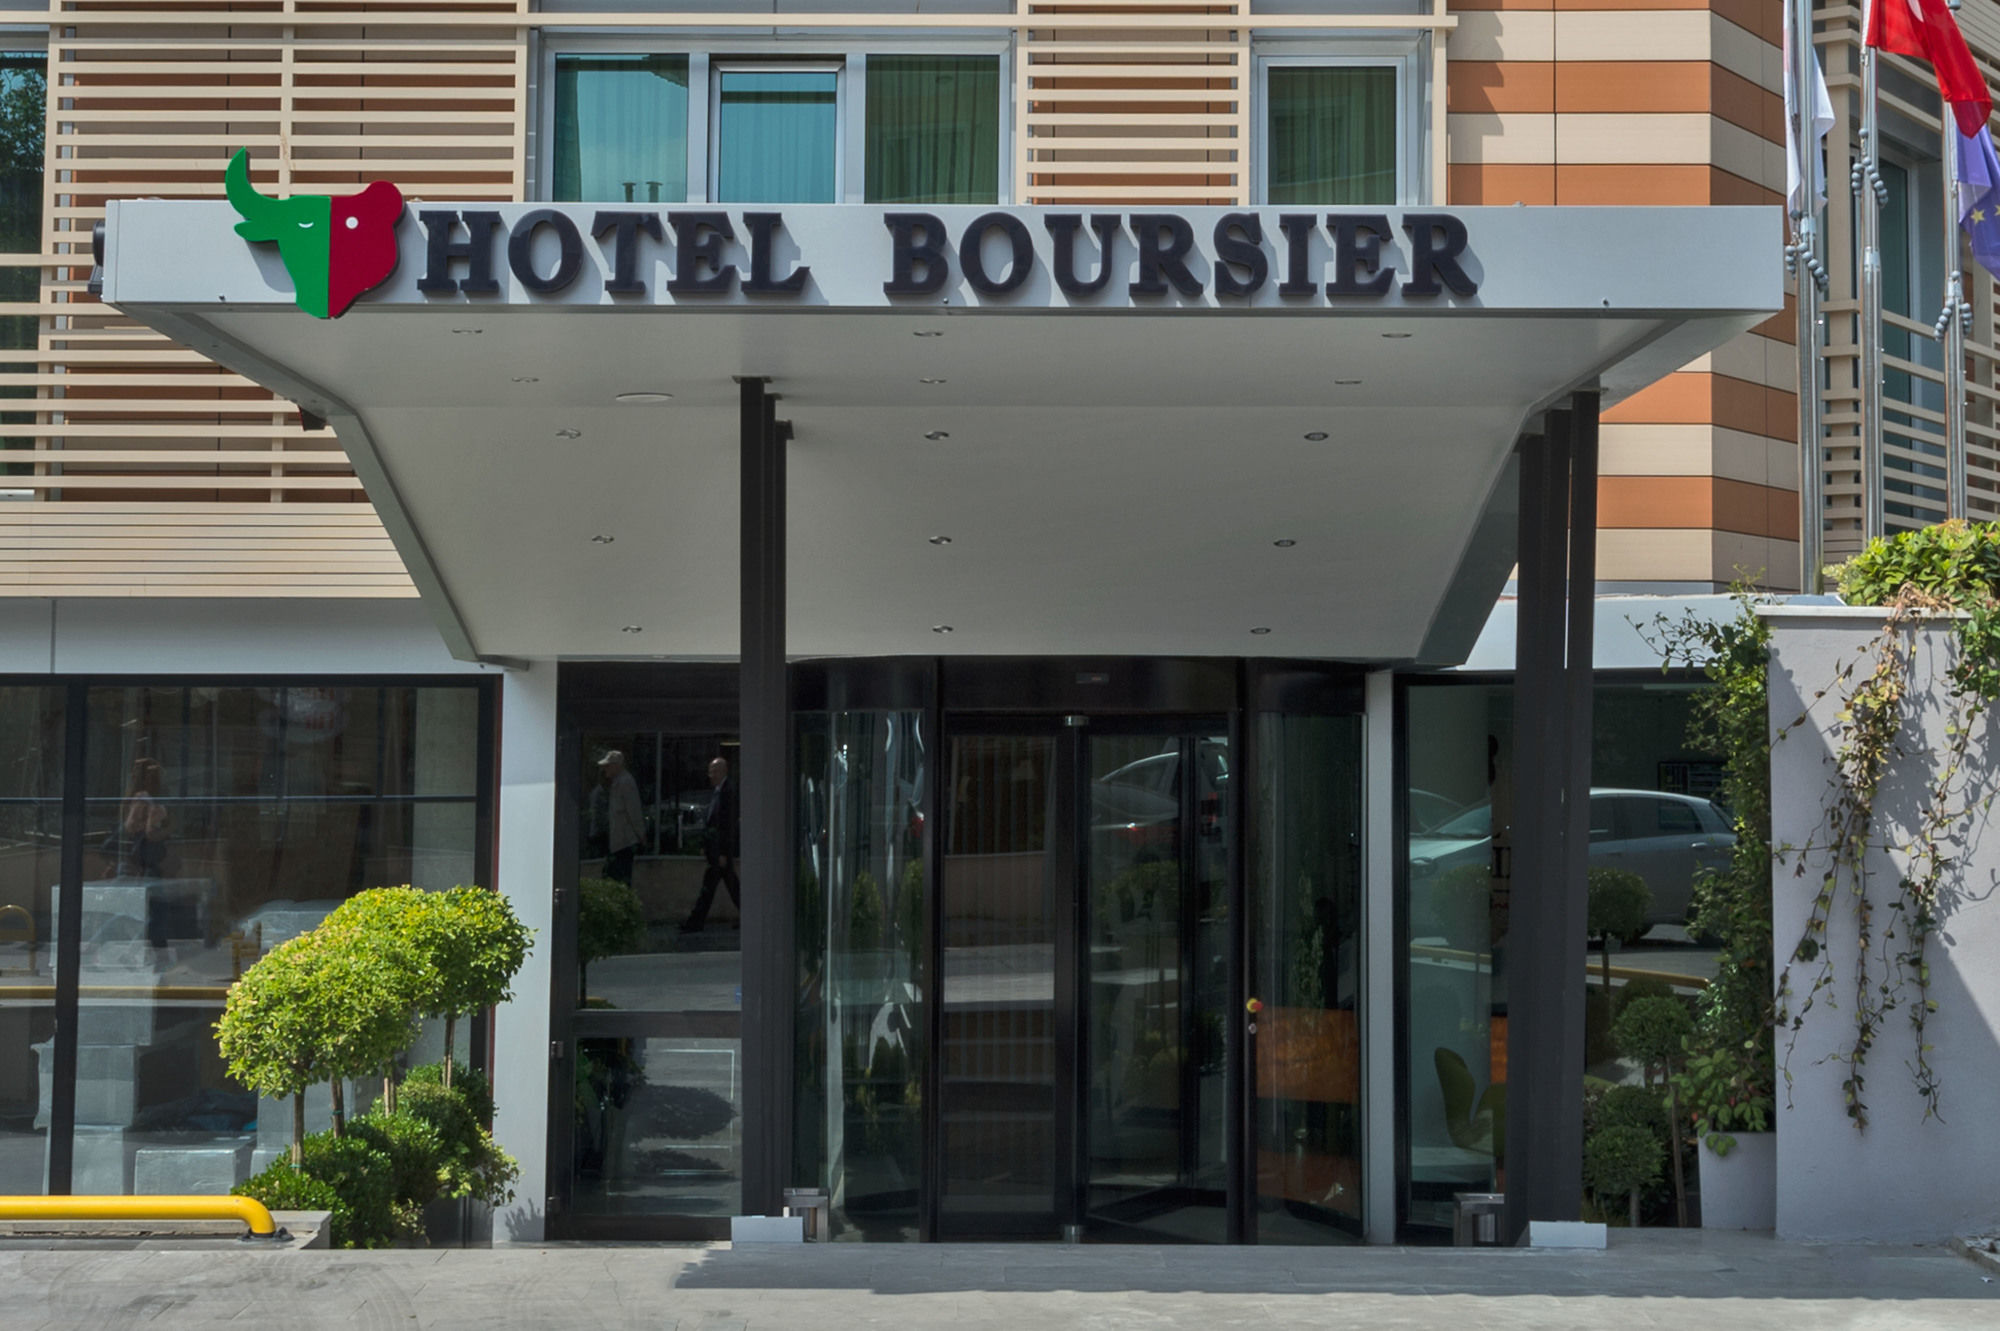 Hotel Boursier Istanbul